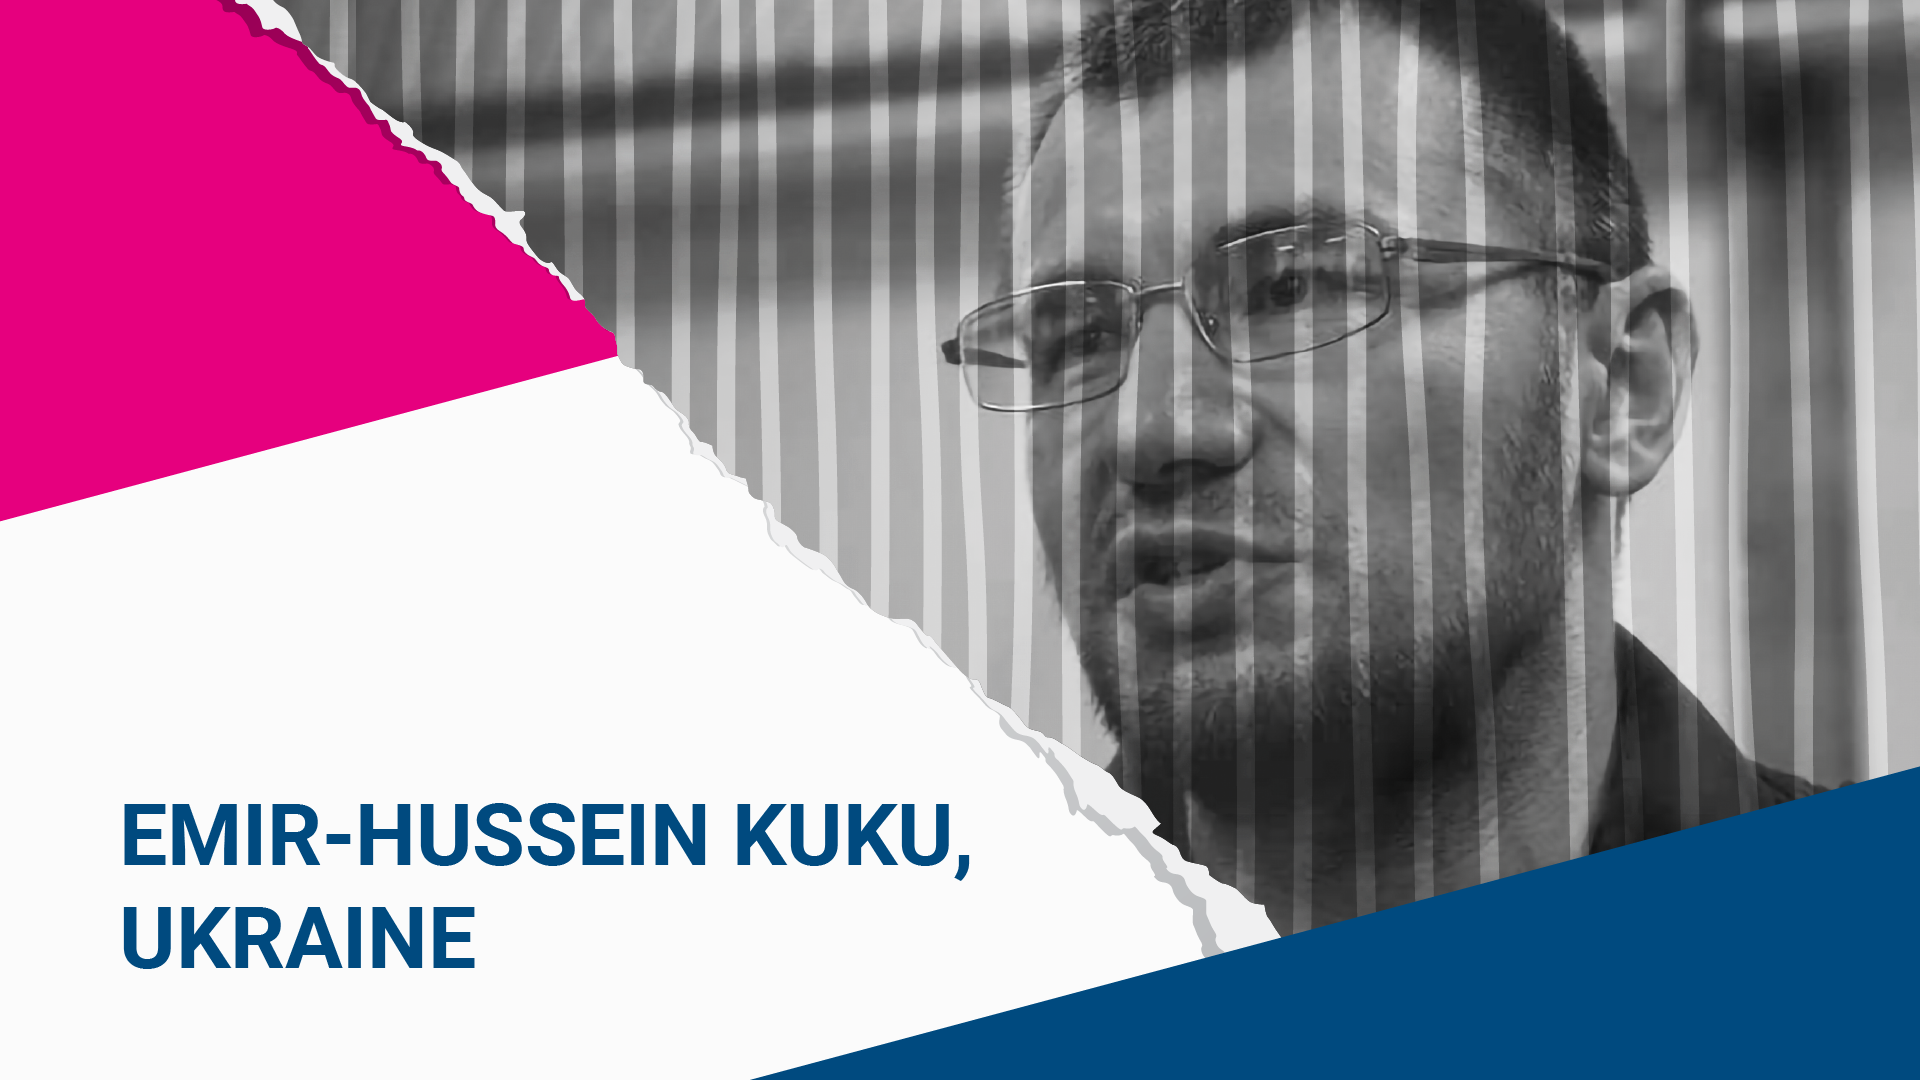 Prisoner of Conscience: Emir-Hussein Kuku, Ukraine 